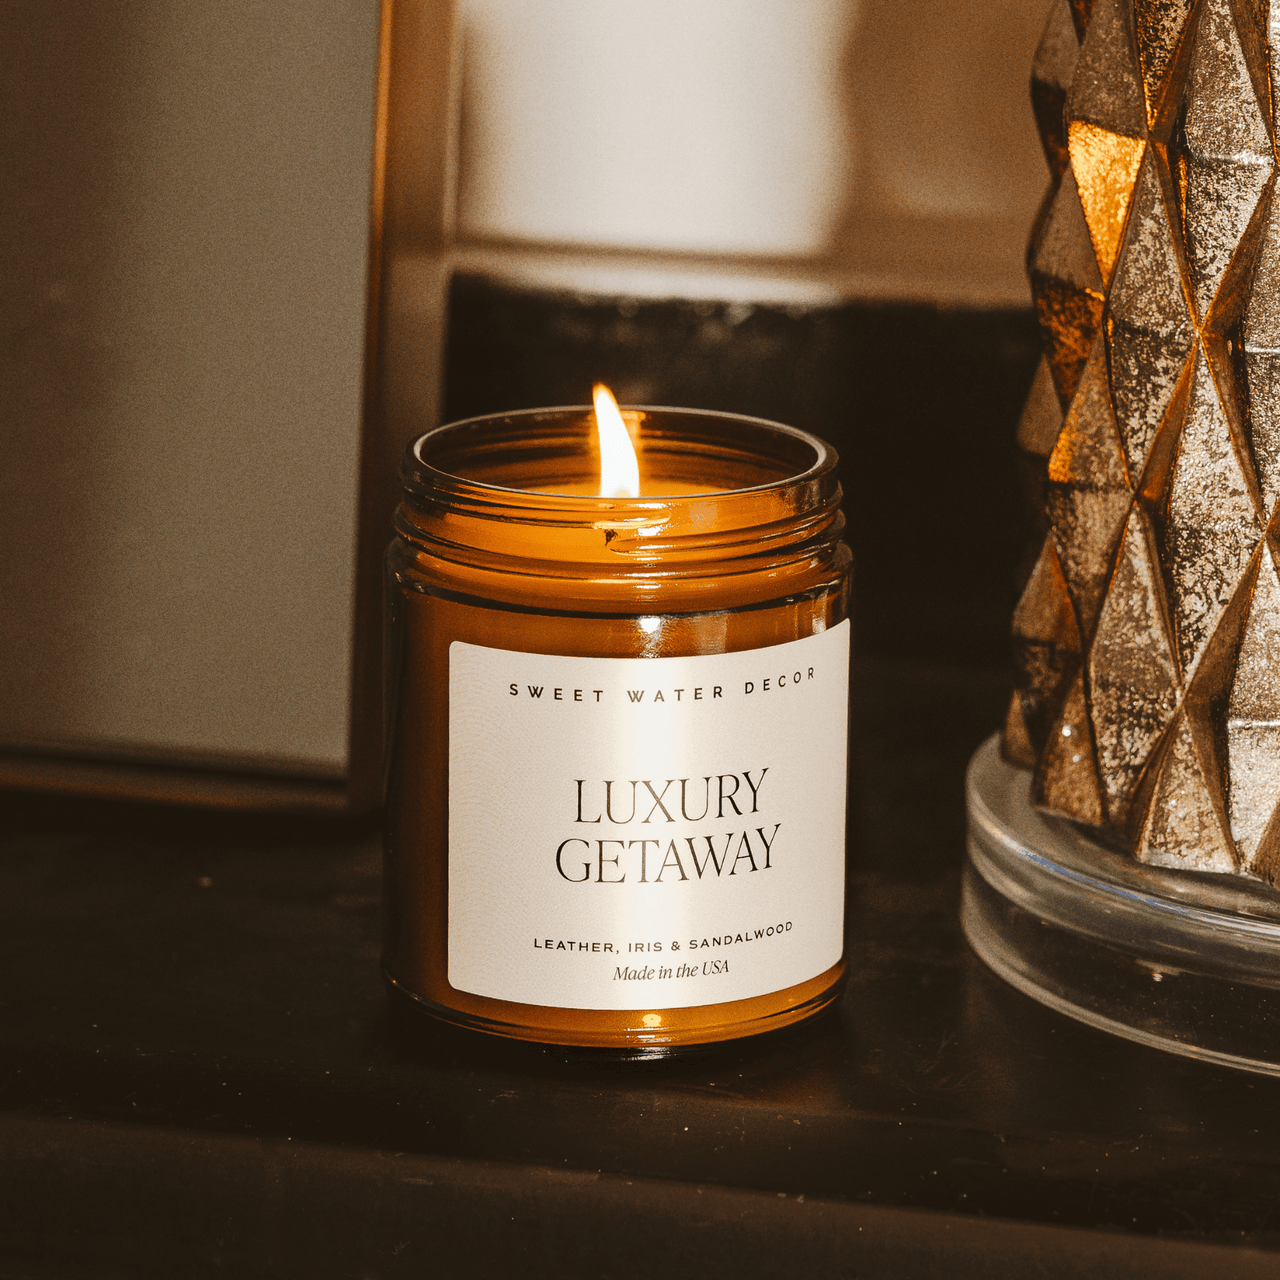 Luxury Getaway Soy Candle - Amber Jar - 9 oz - Tony's Home Furnishings